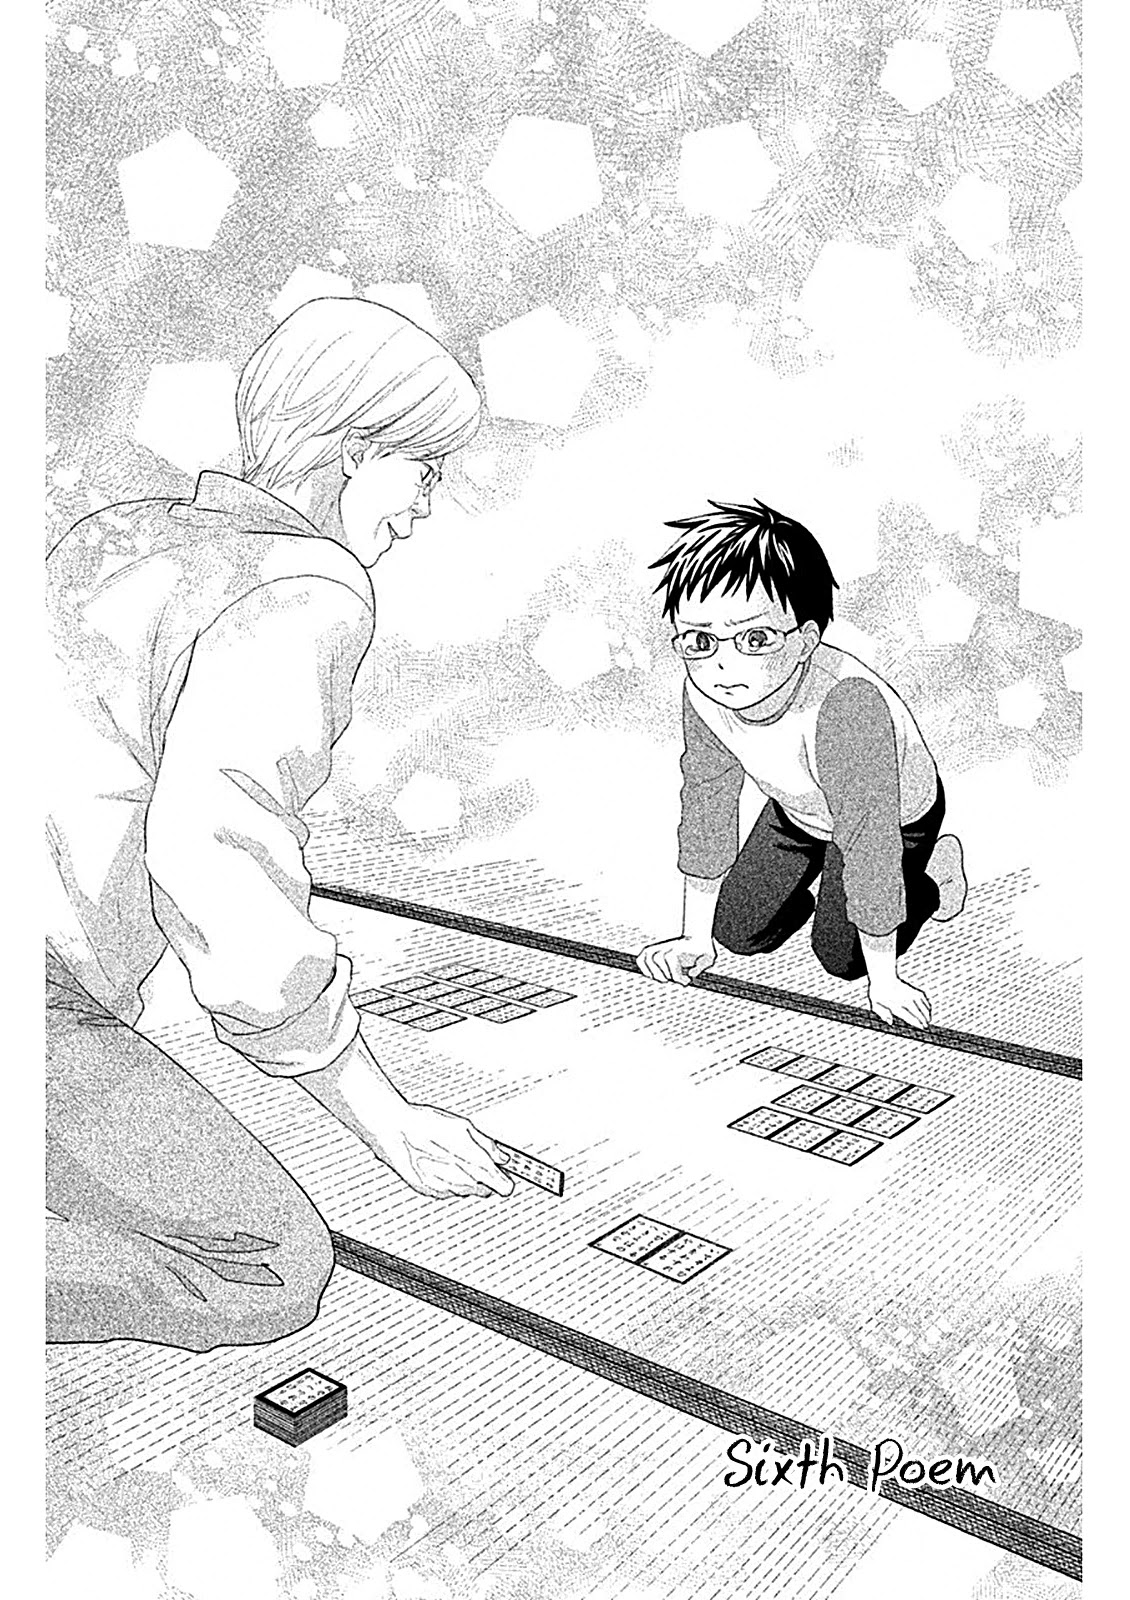 Chihayafuru: Middle School Arc - Page 2